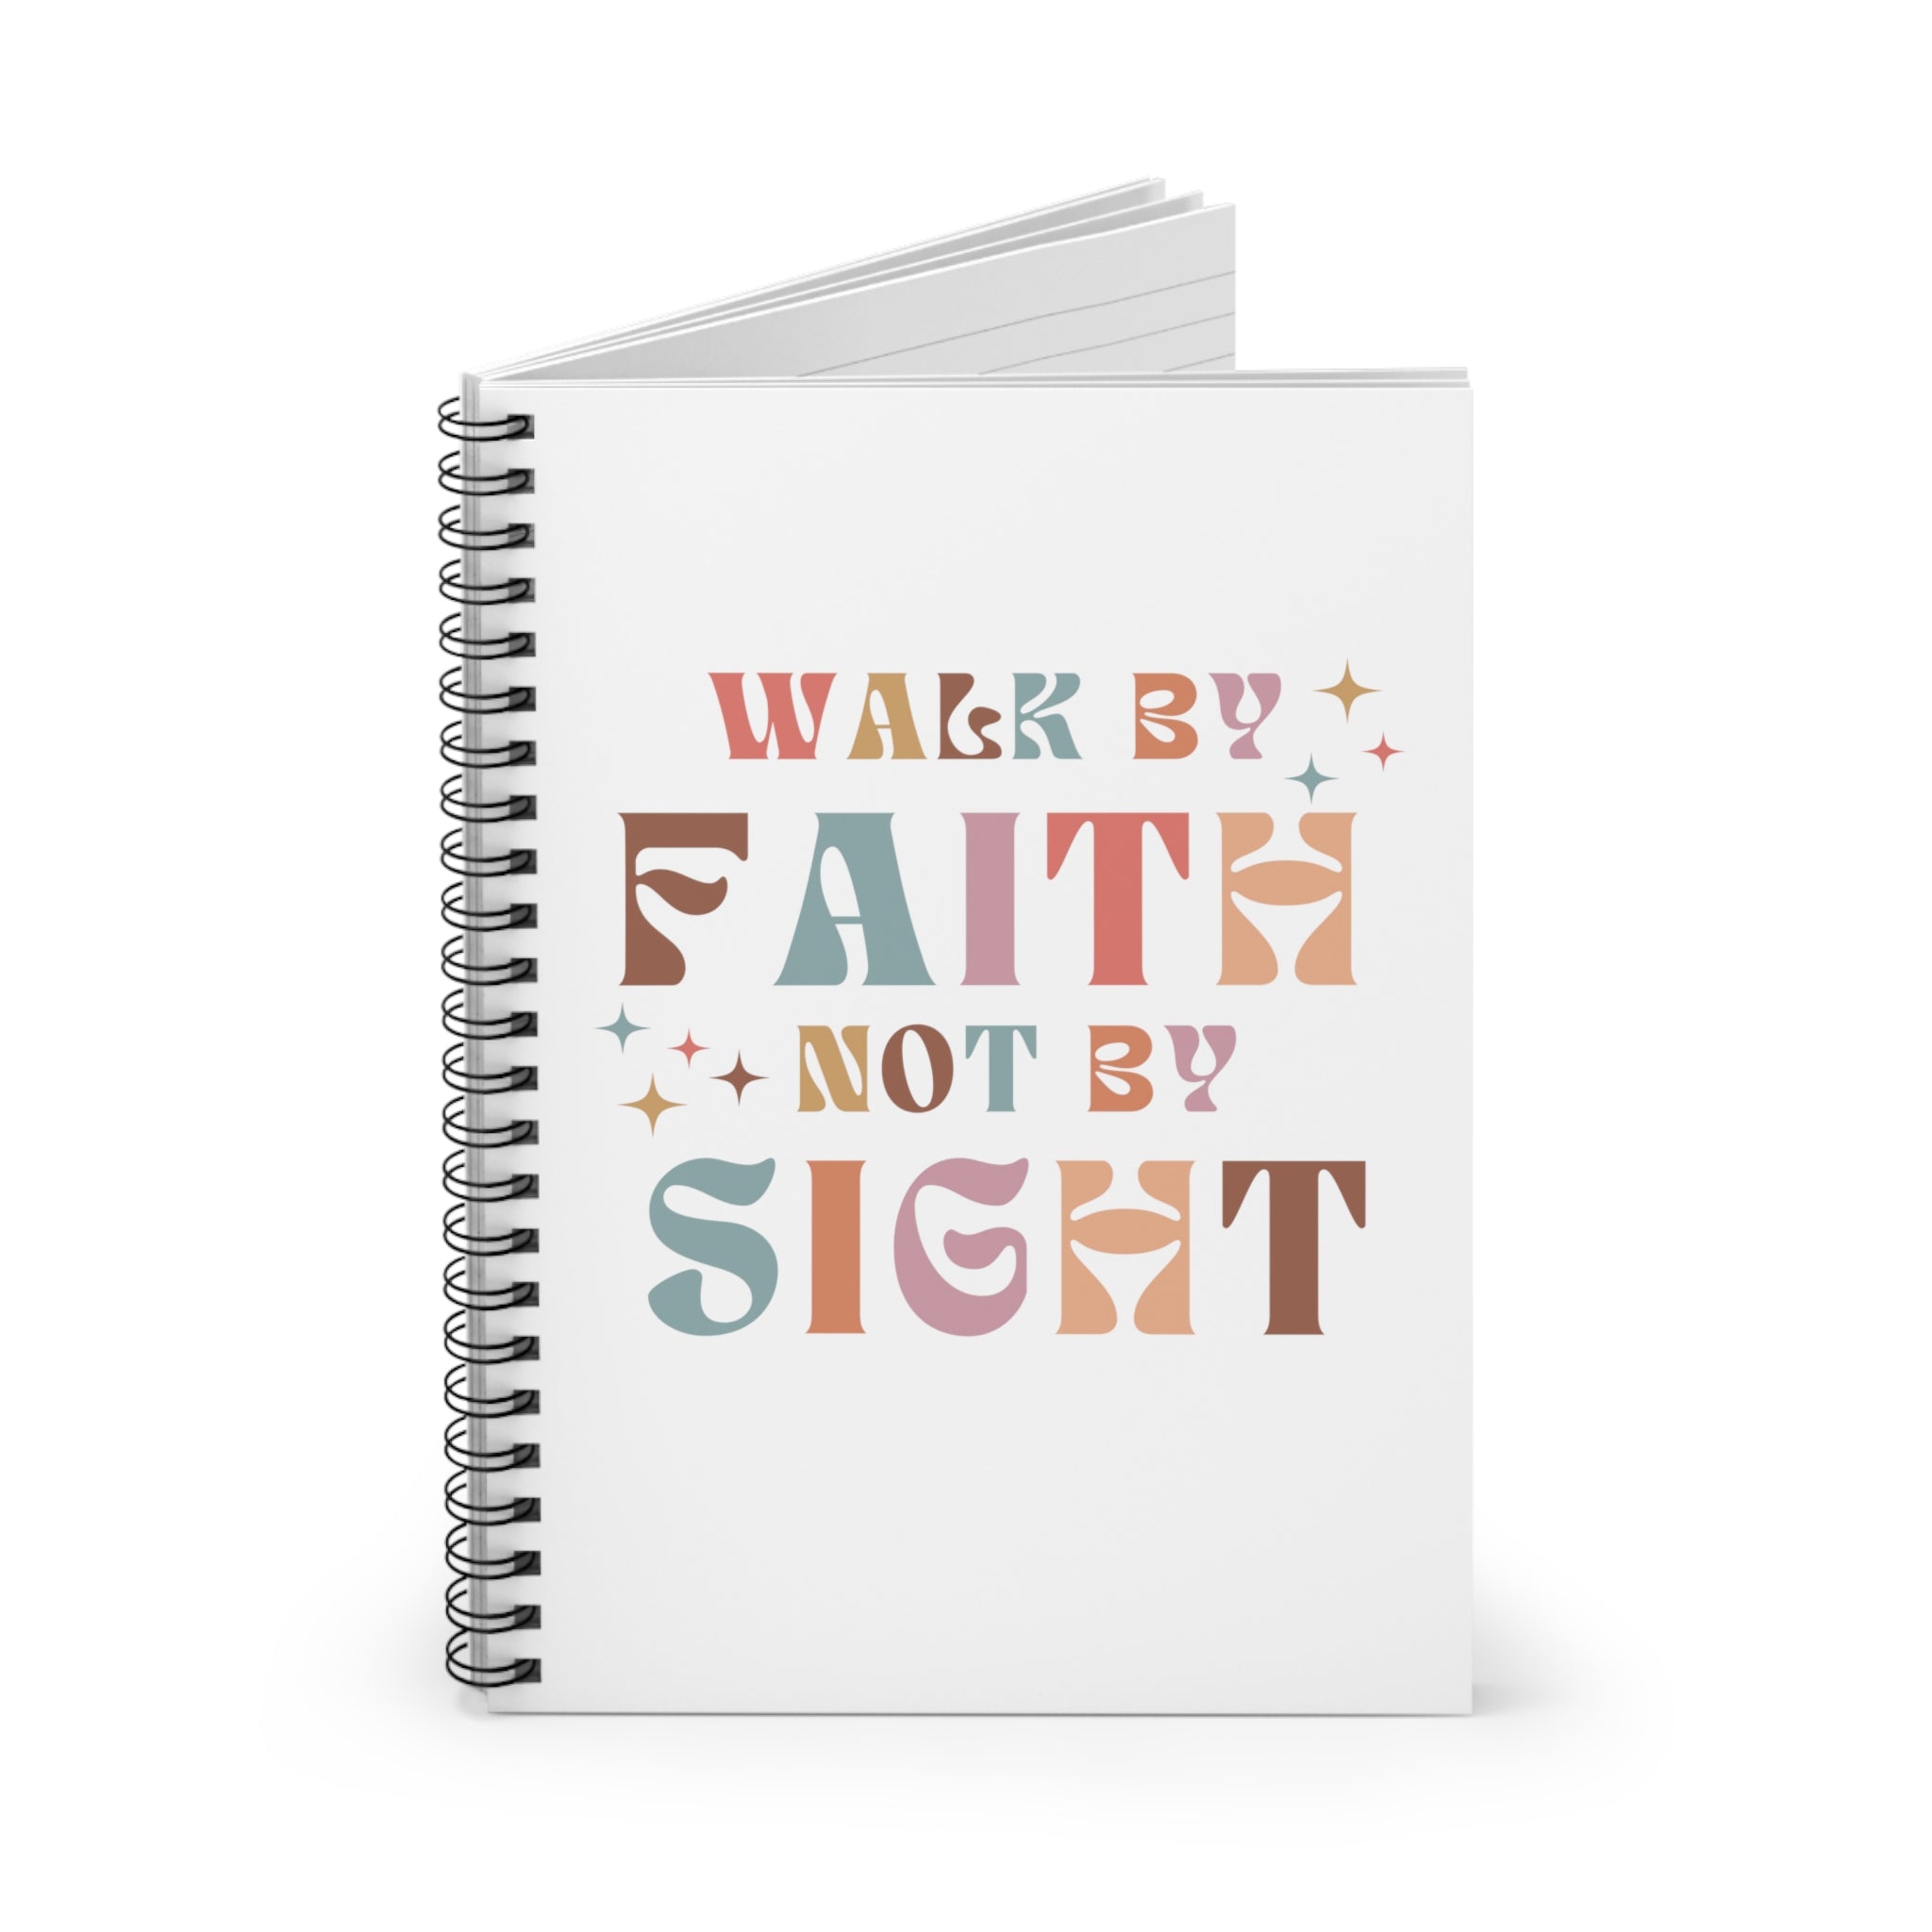 "Walk by Faith" Spiral Notebook - Ruled Line